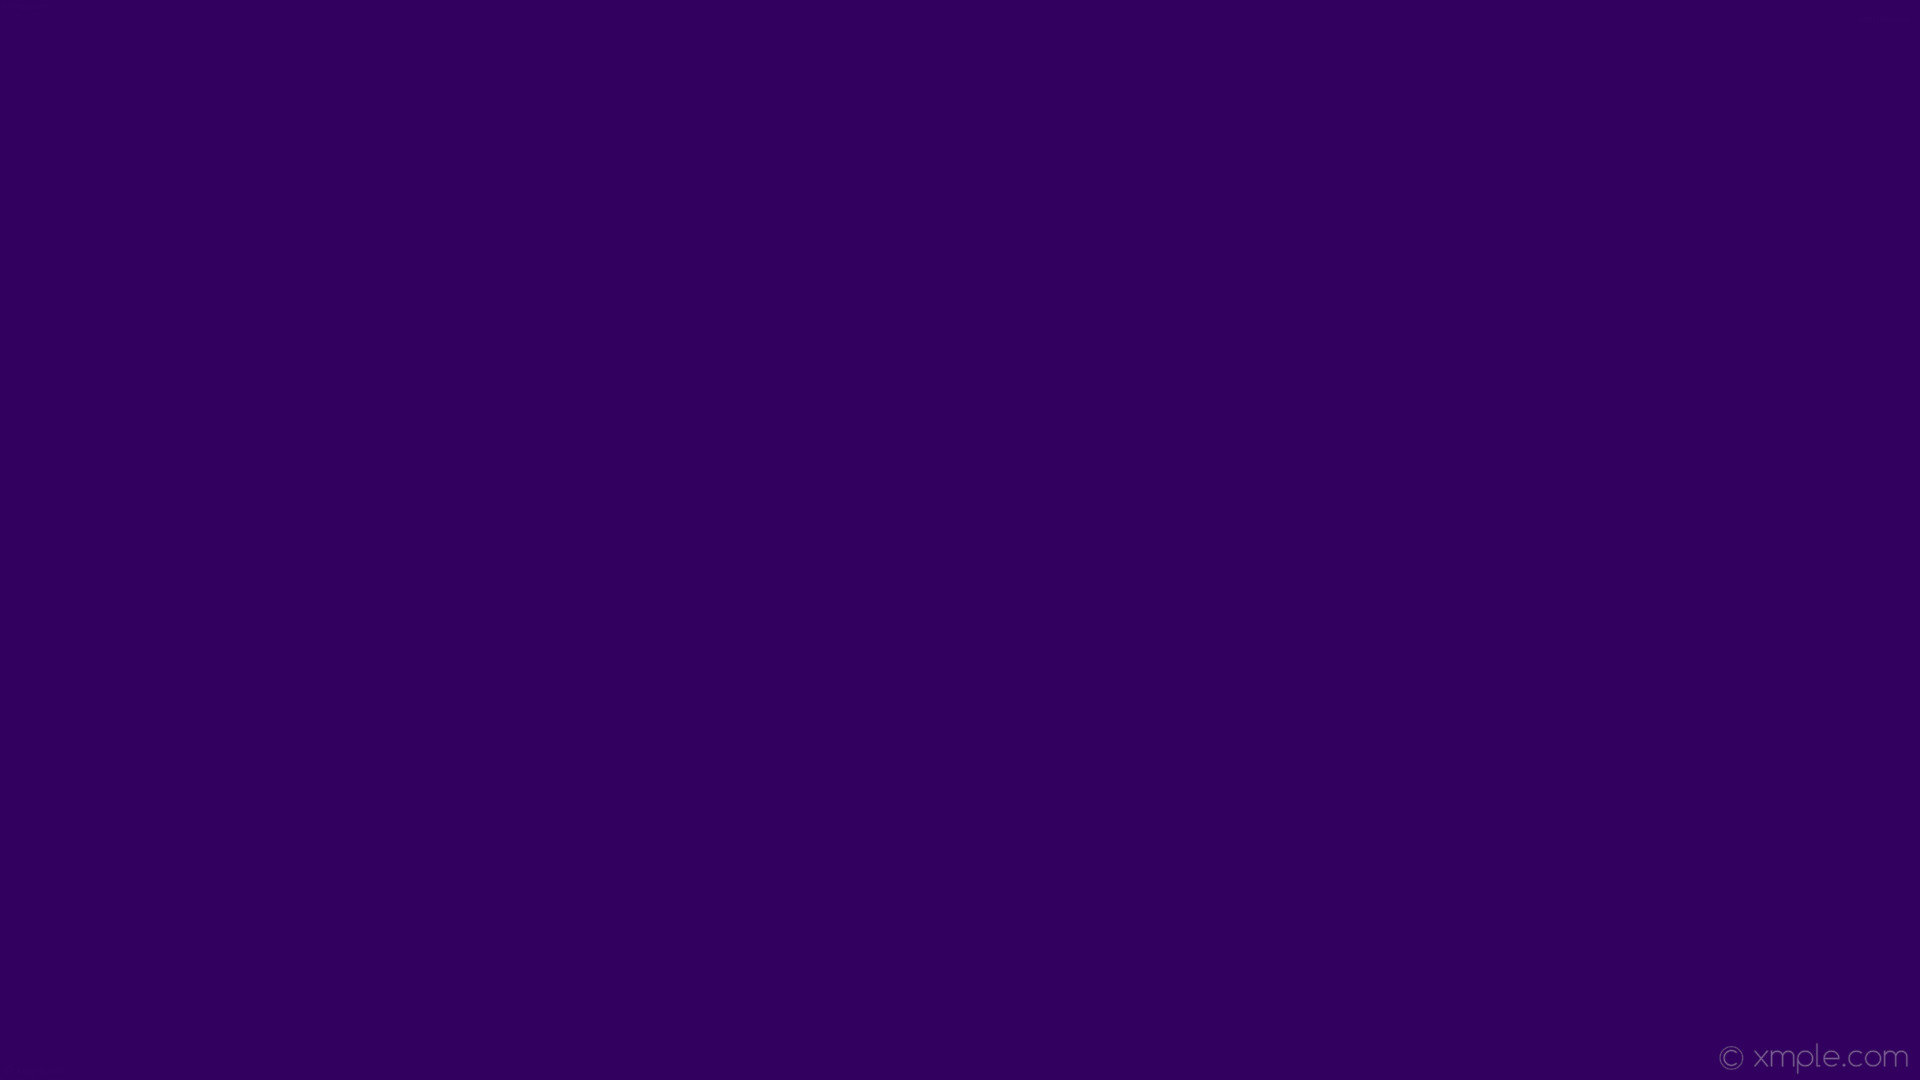 1920x1080 wallpaper solid color violet one colour single plain dark violet #32005f